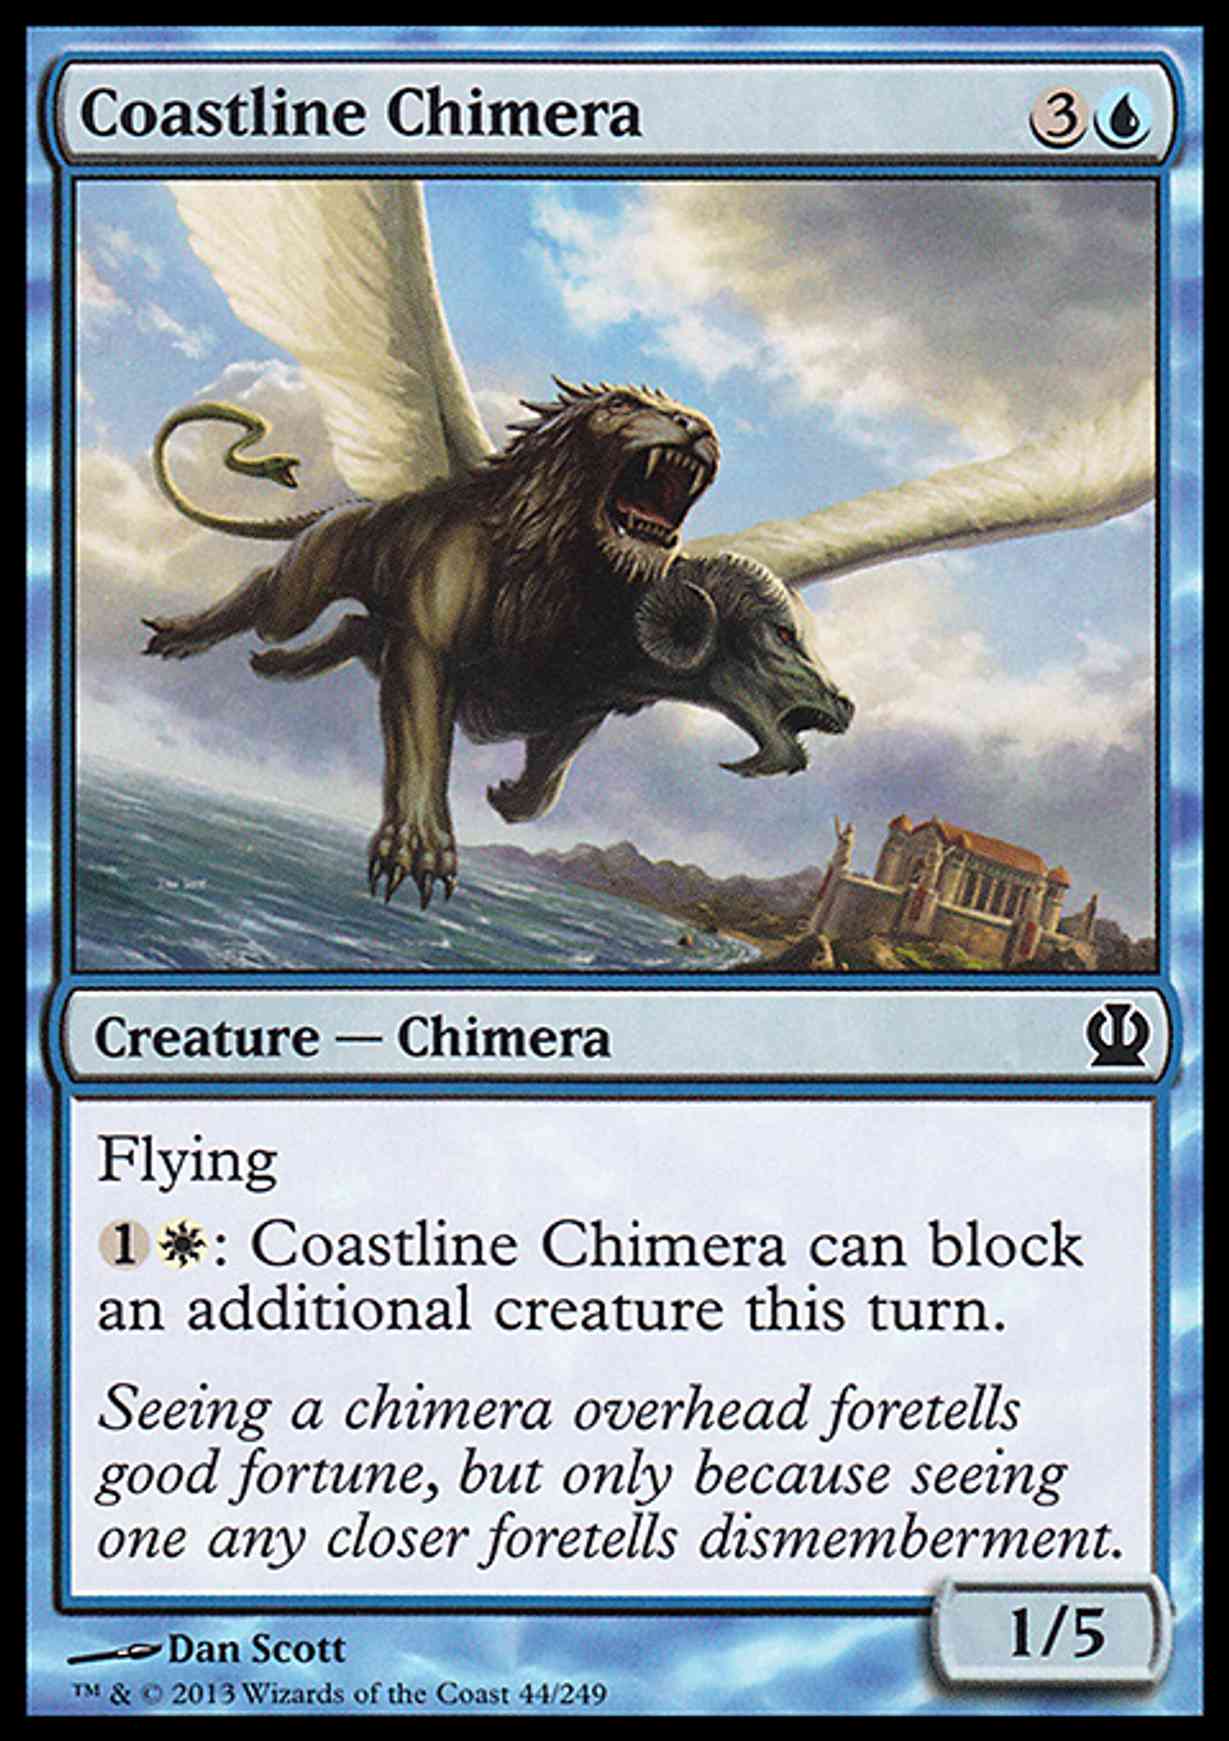 Coastline Chimera magic card front